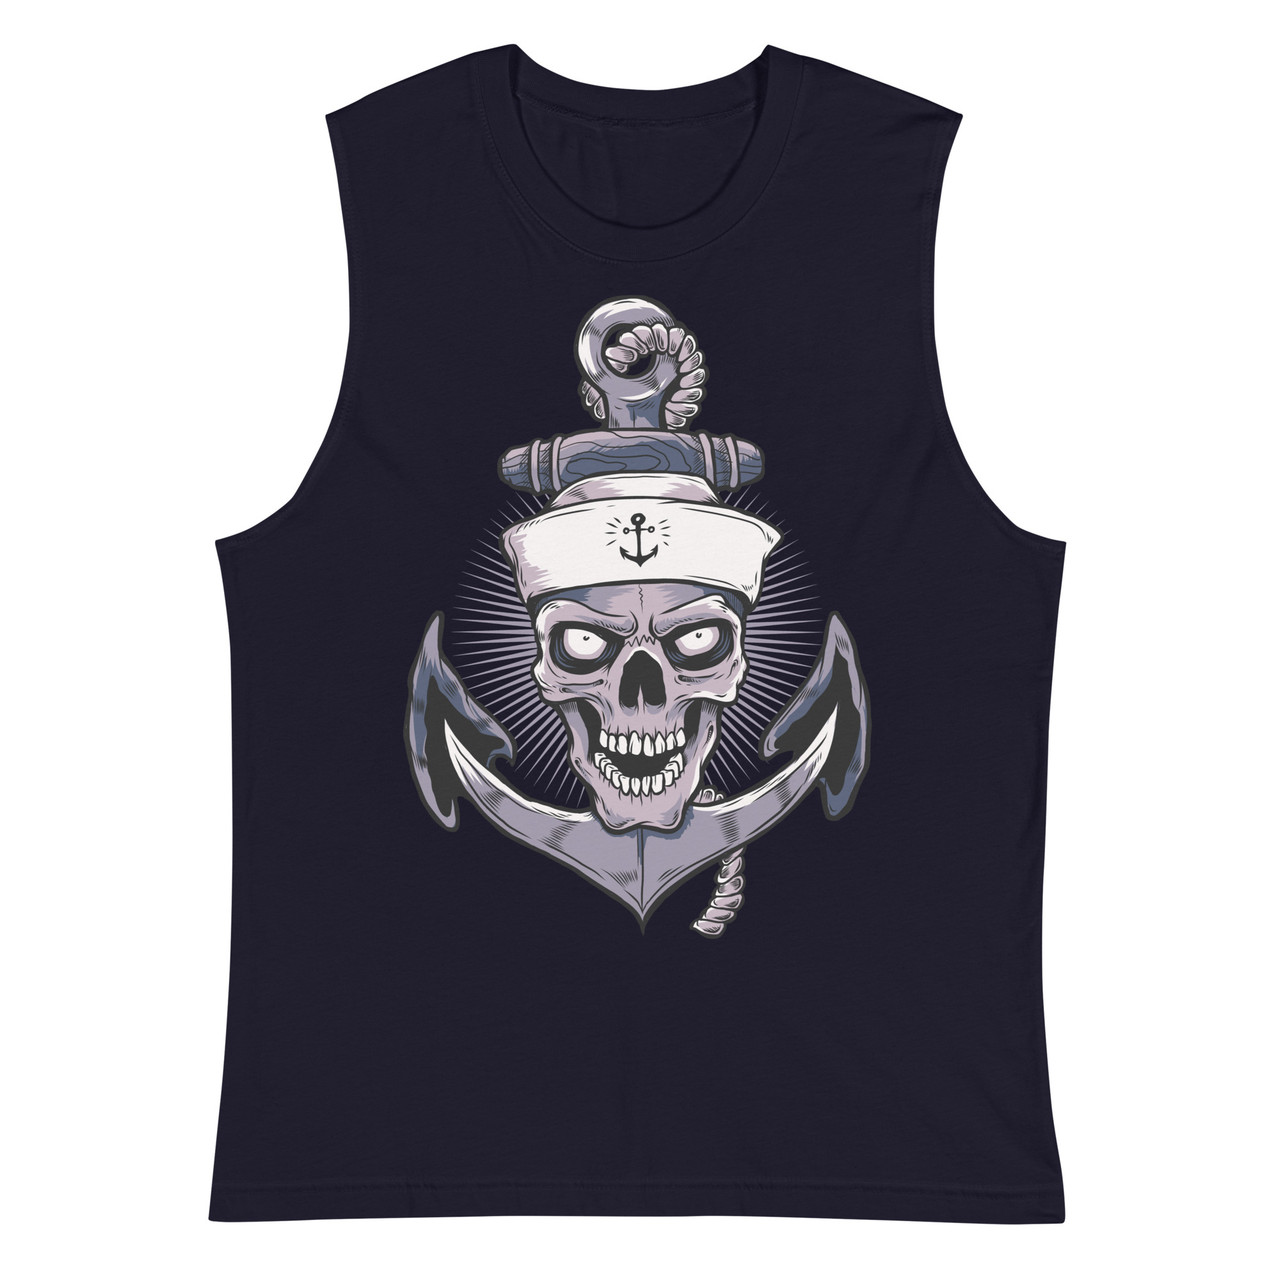  Anchor Skull Unisex Muscle Shirt - Bella + Canvas 3483 